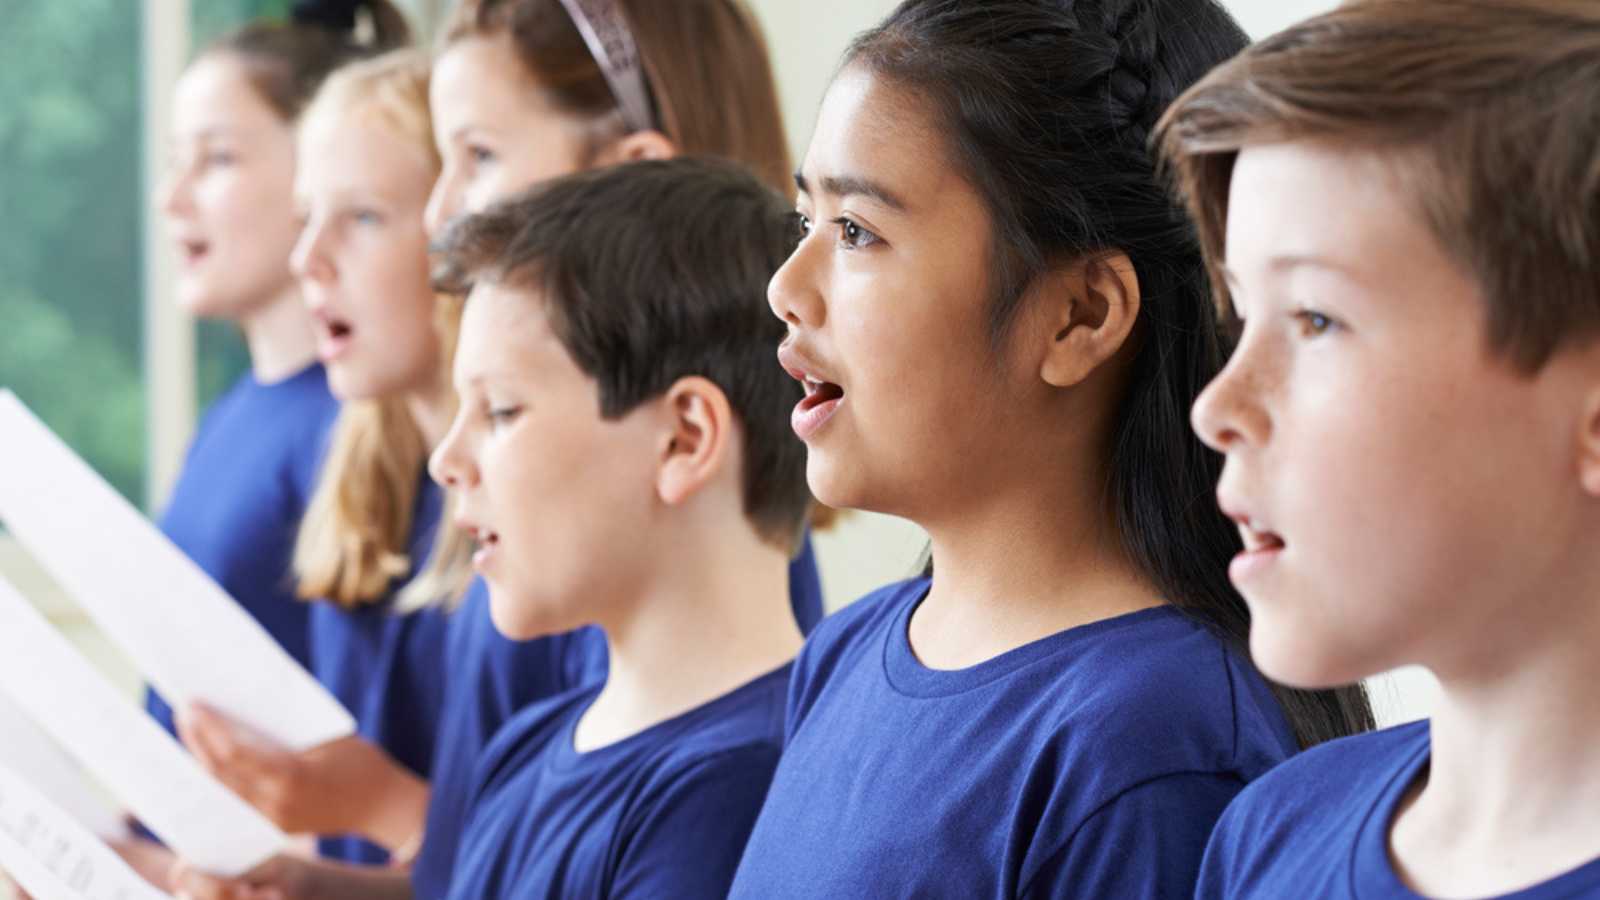 School kids singing at church